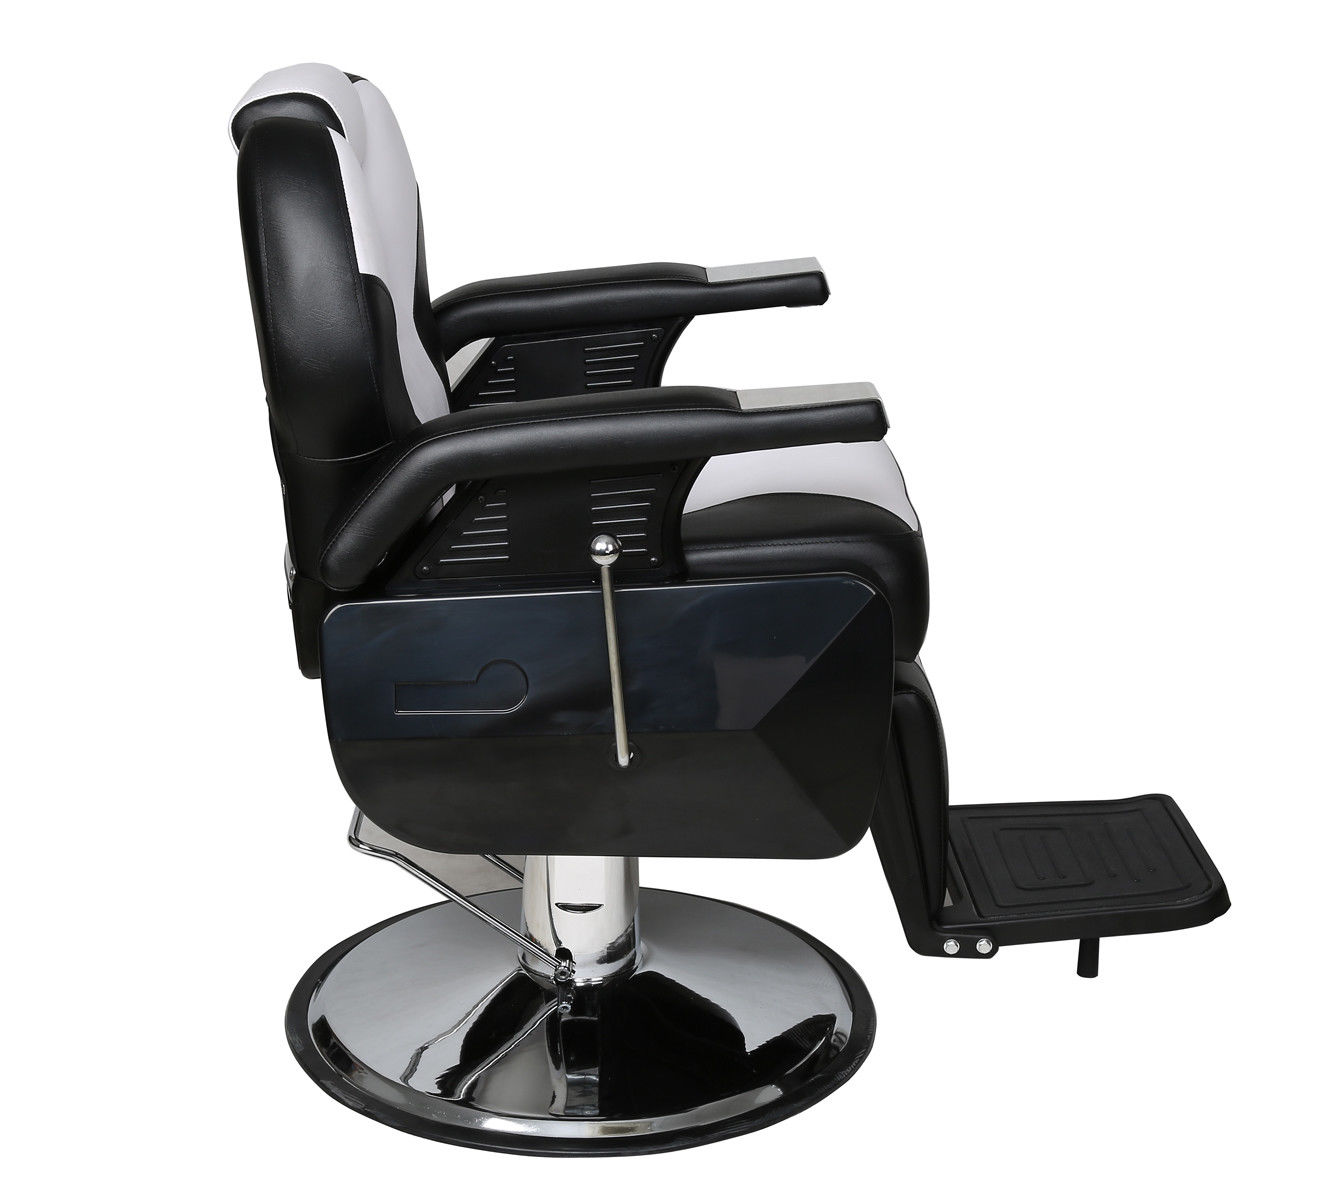 BarberPub All Purpose Hydraulic Barber Chair Salon Beauty Chair 2687 White&Black